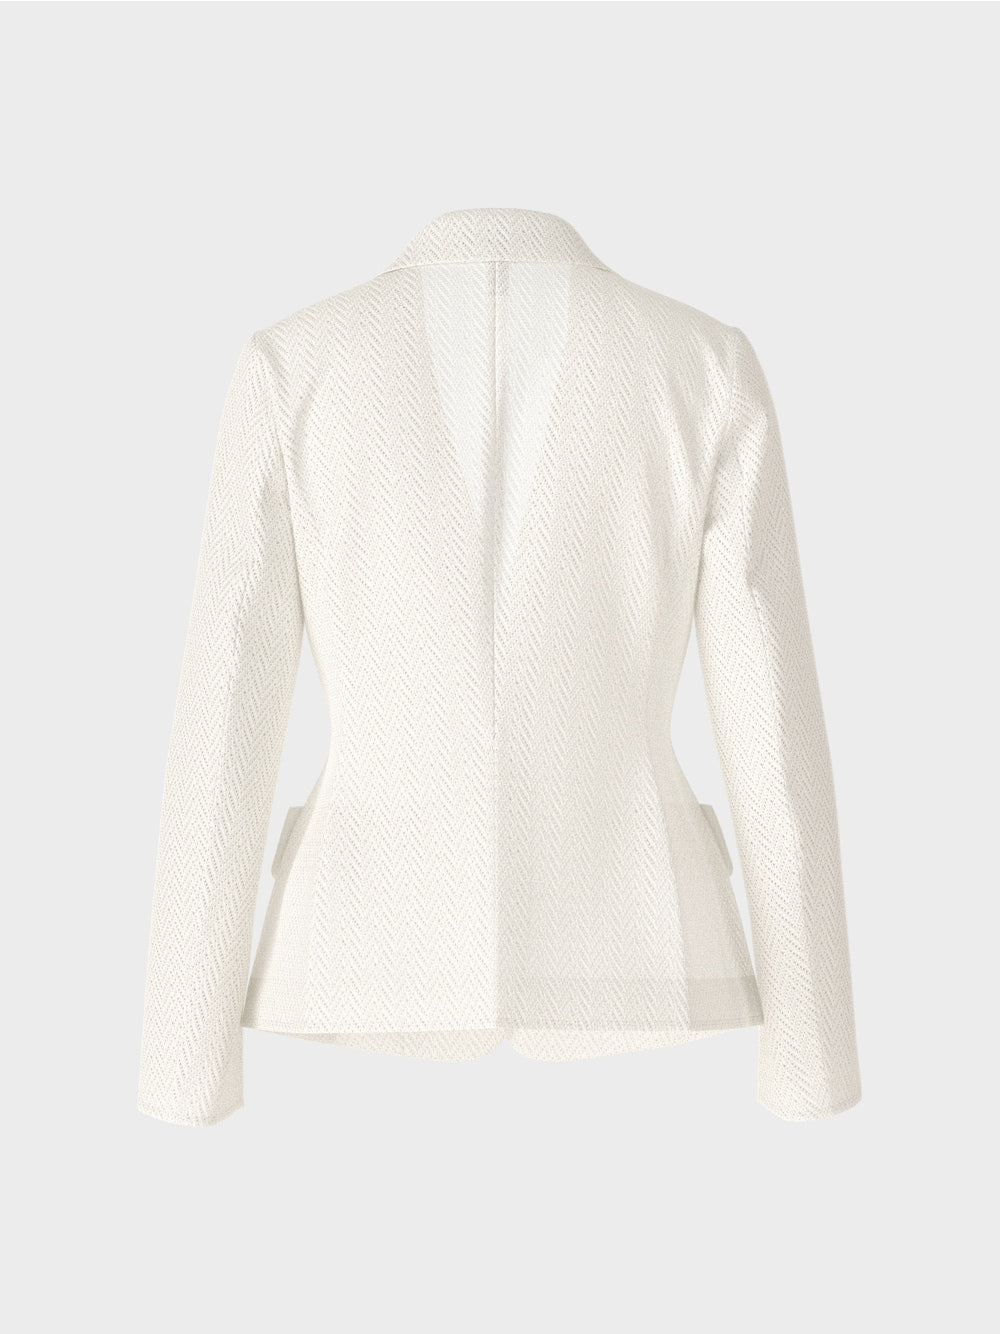 Knitted Blazer in Off-White